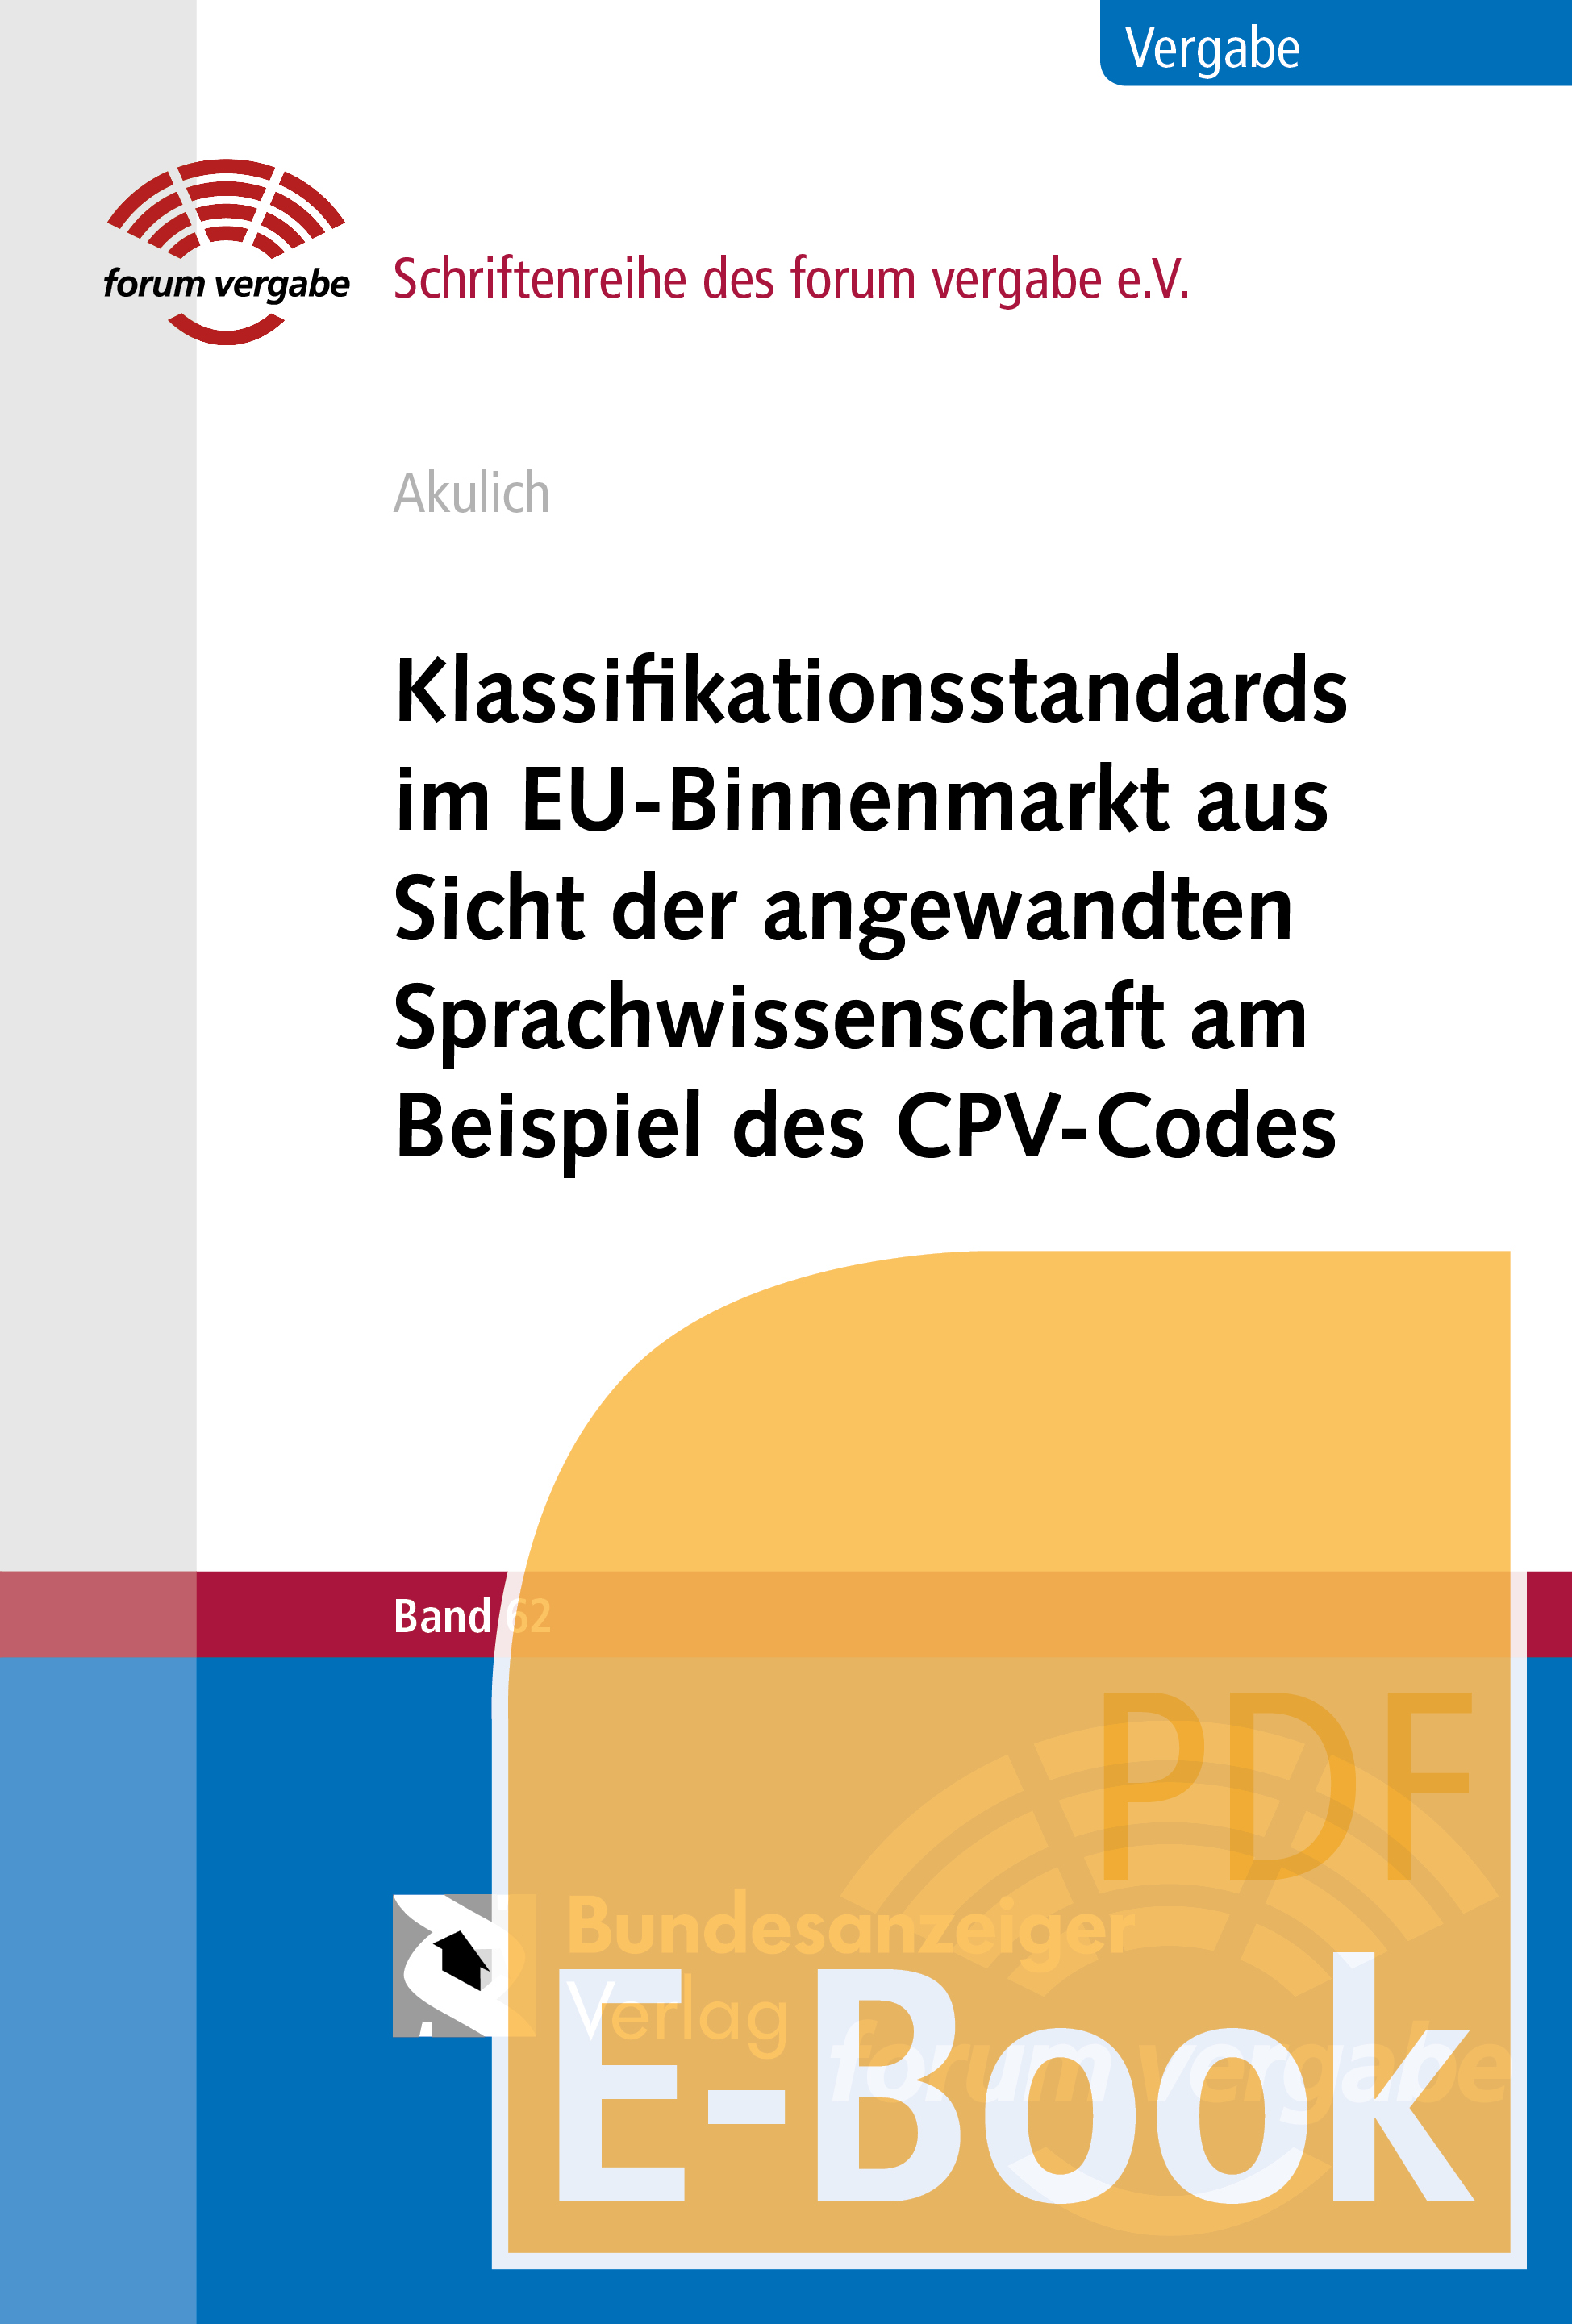 Klassifikationsstandards im EU-Binnenmarkt (E-Book)